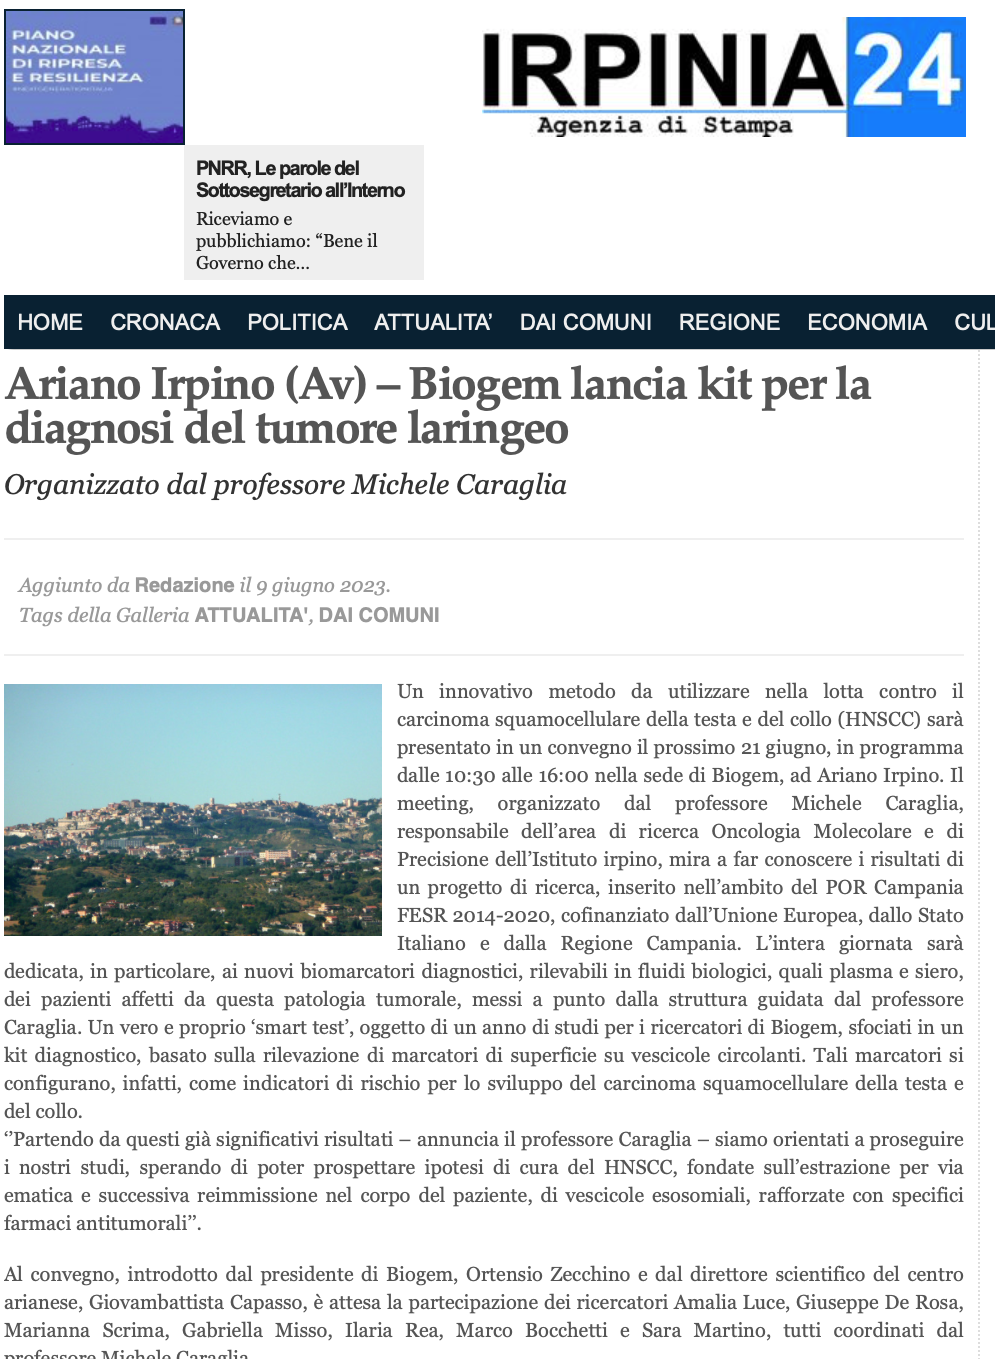 Ariano Irpino (AV) - Biogem lancia kit per la diagnosi del tumore laringeo